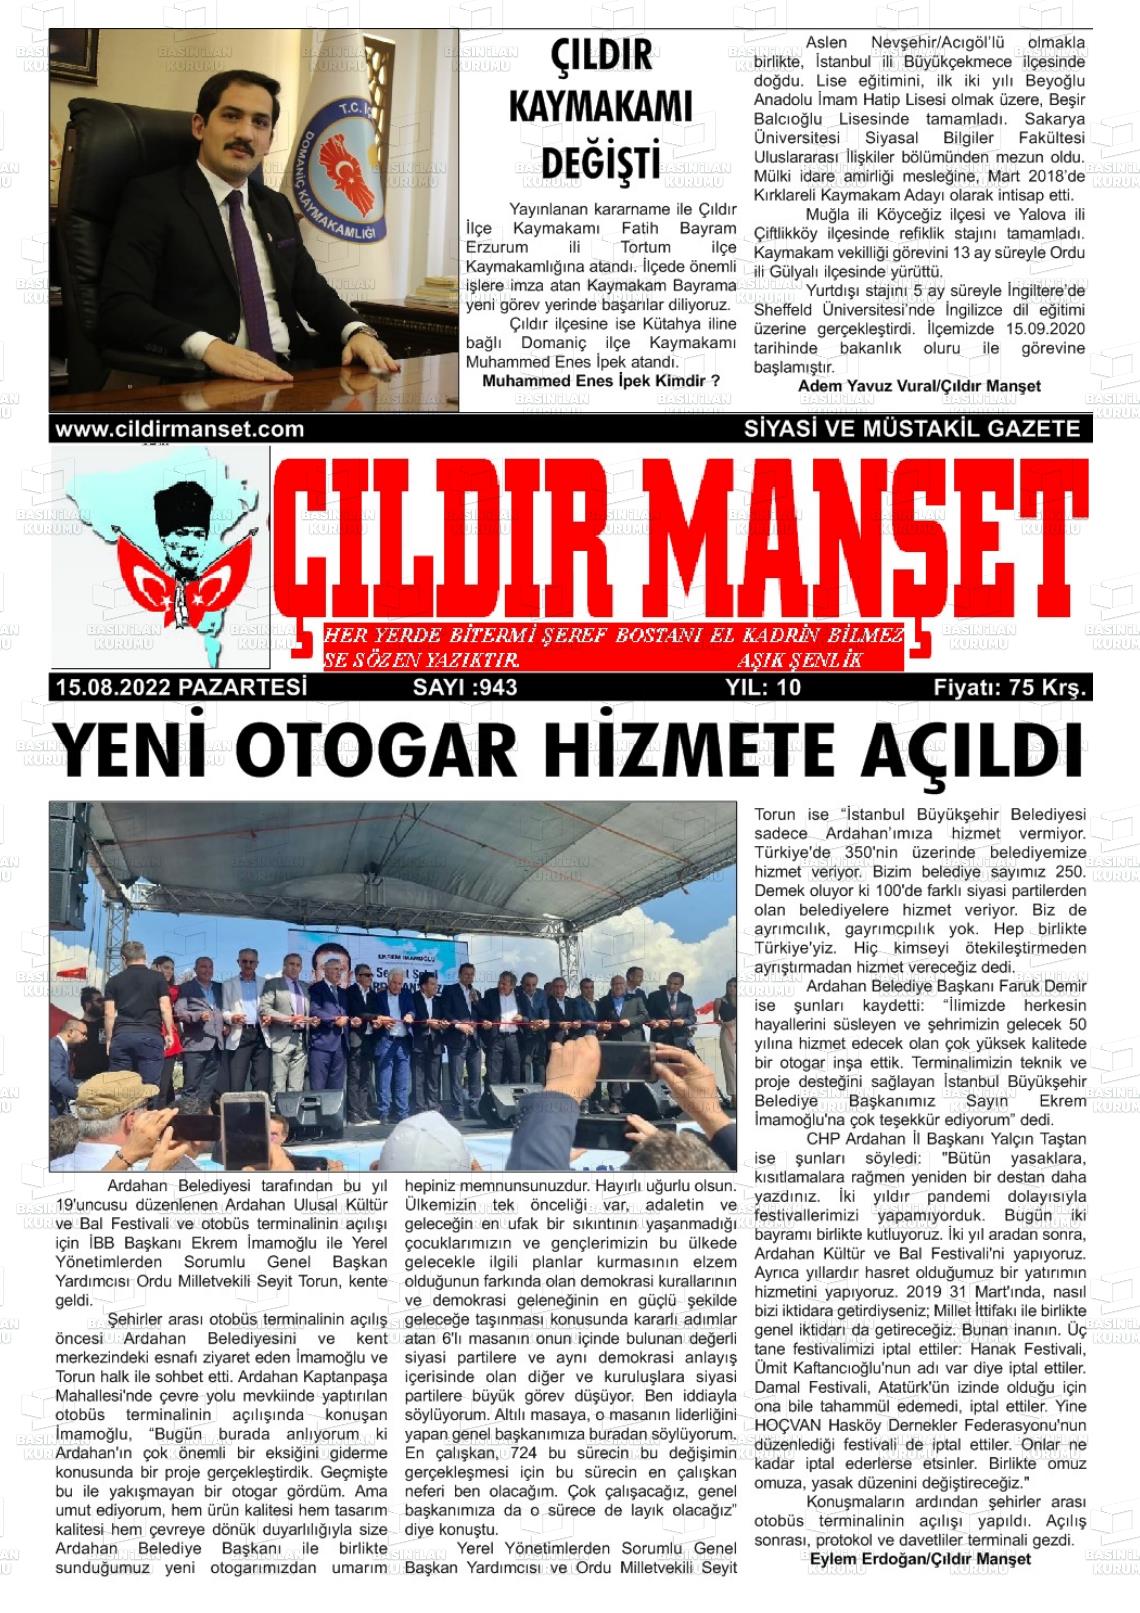 15 Ağustos 2022 Çıldır Manşet Gazete Manşeti